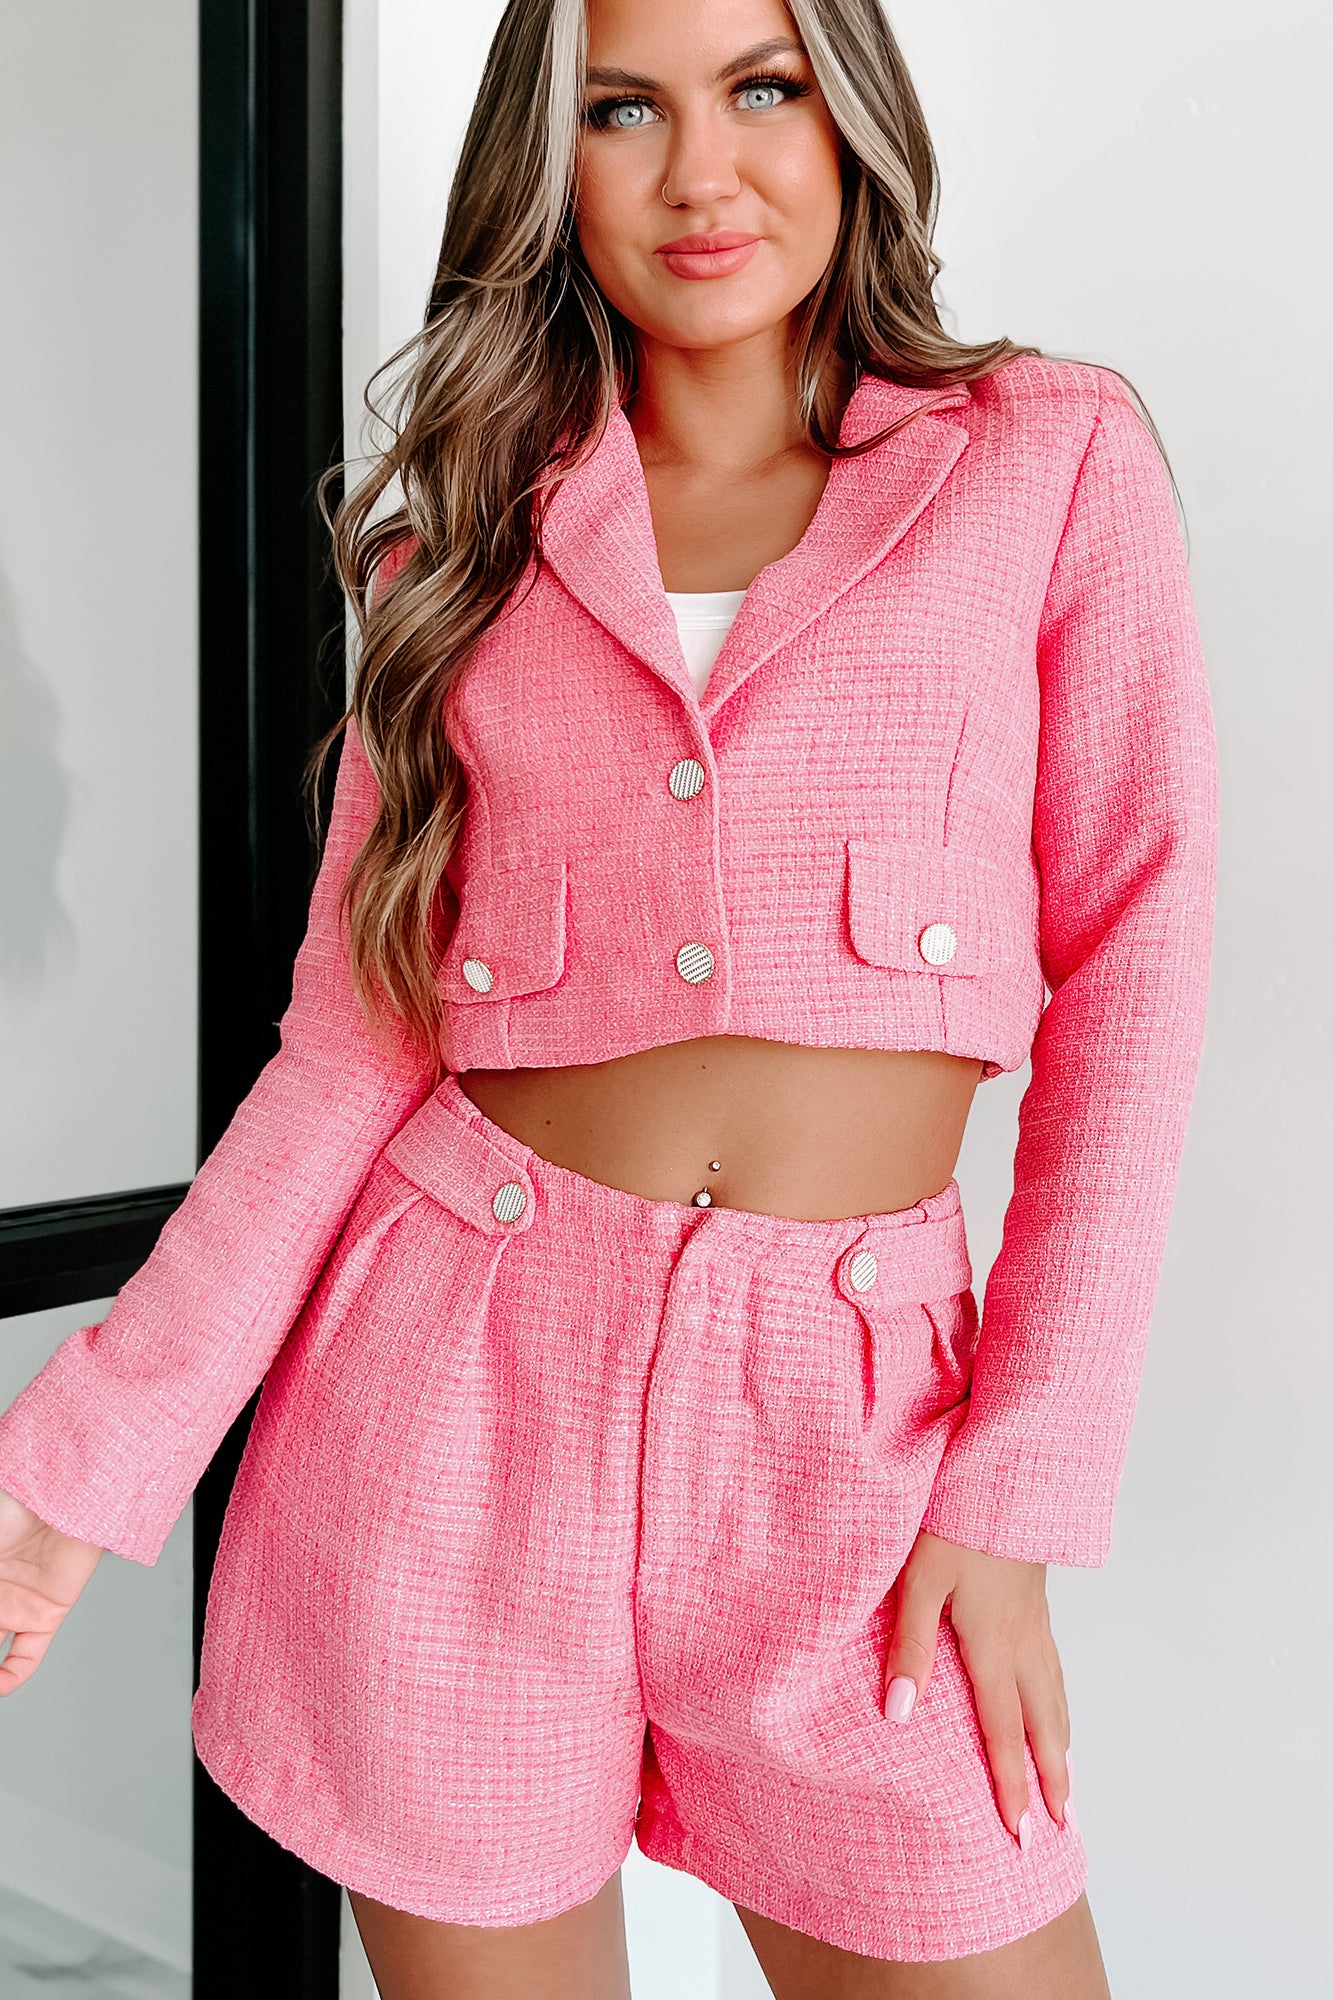 Nylon Apparel Women's Taking Calls Tweed Crop Blazer & Shorts Set in Hot Pink - Size L